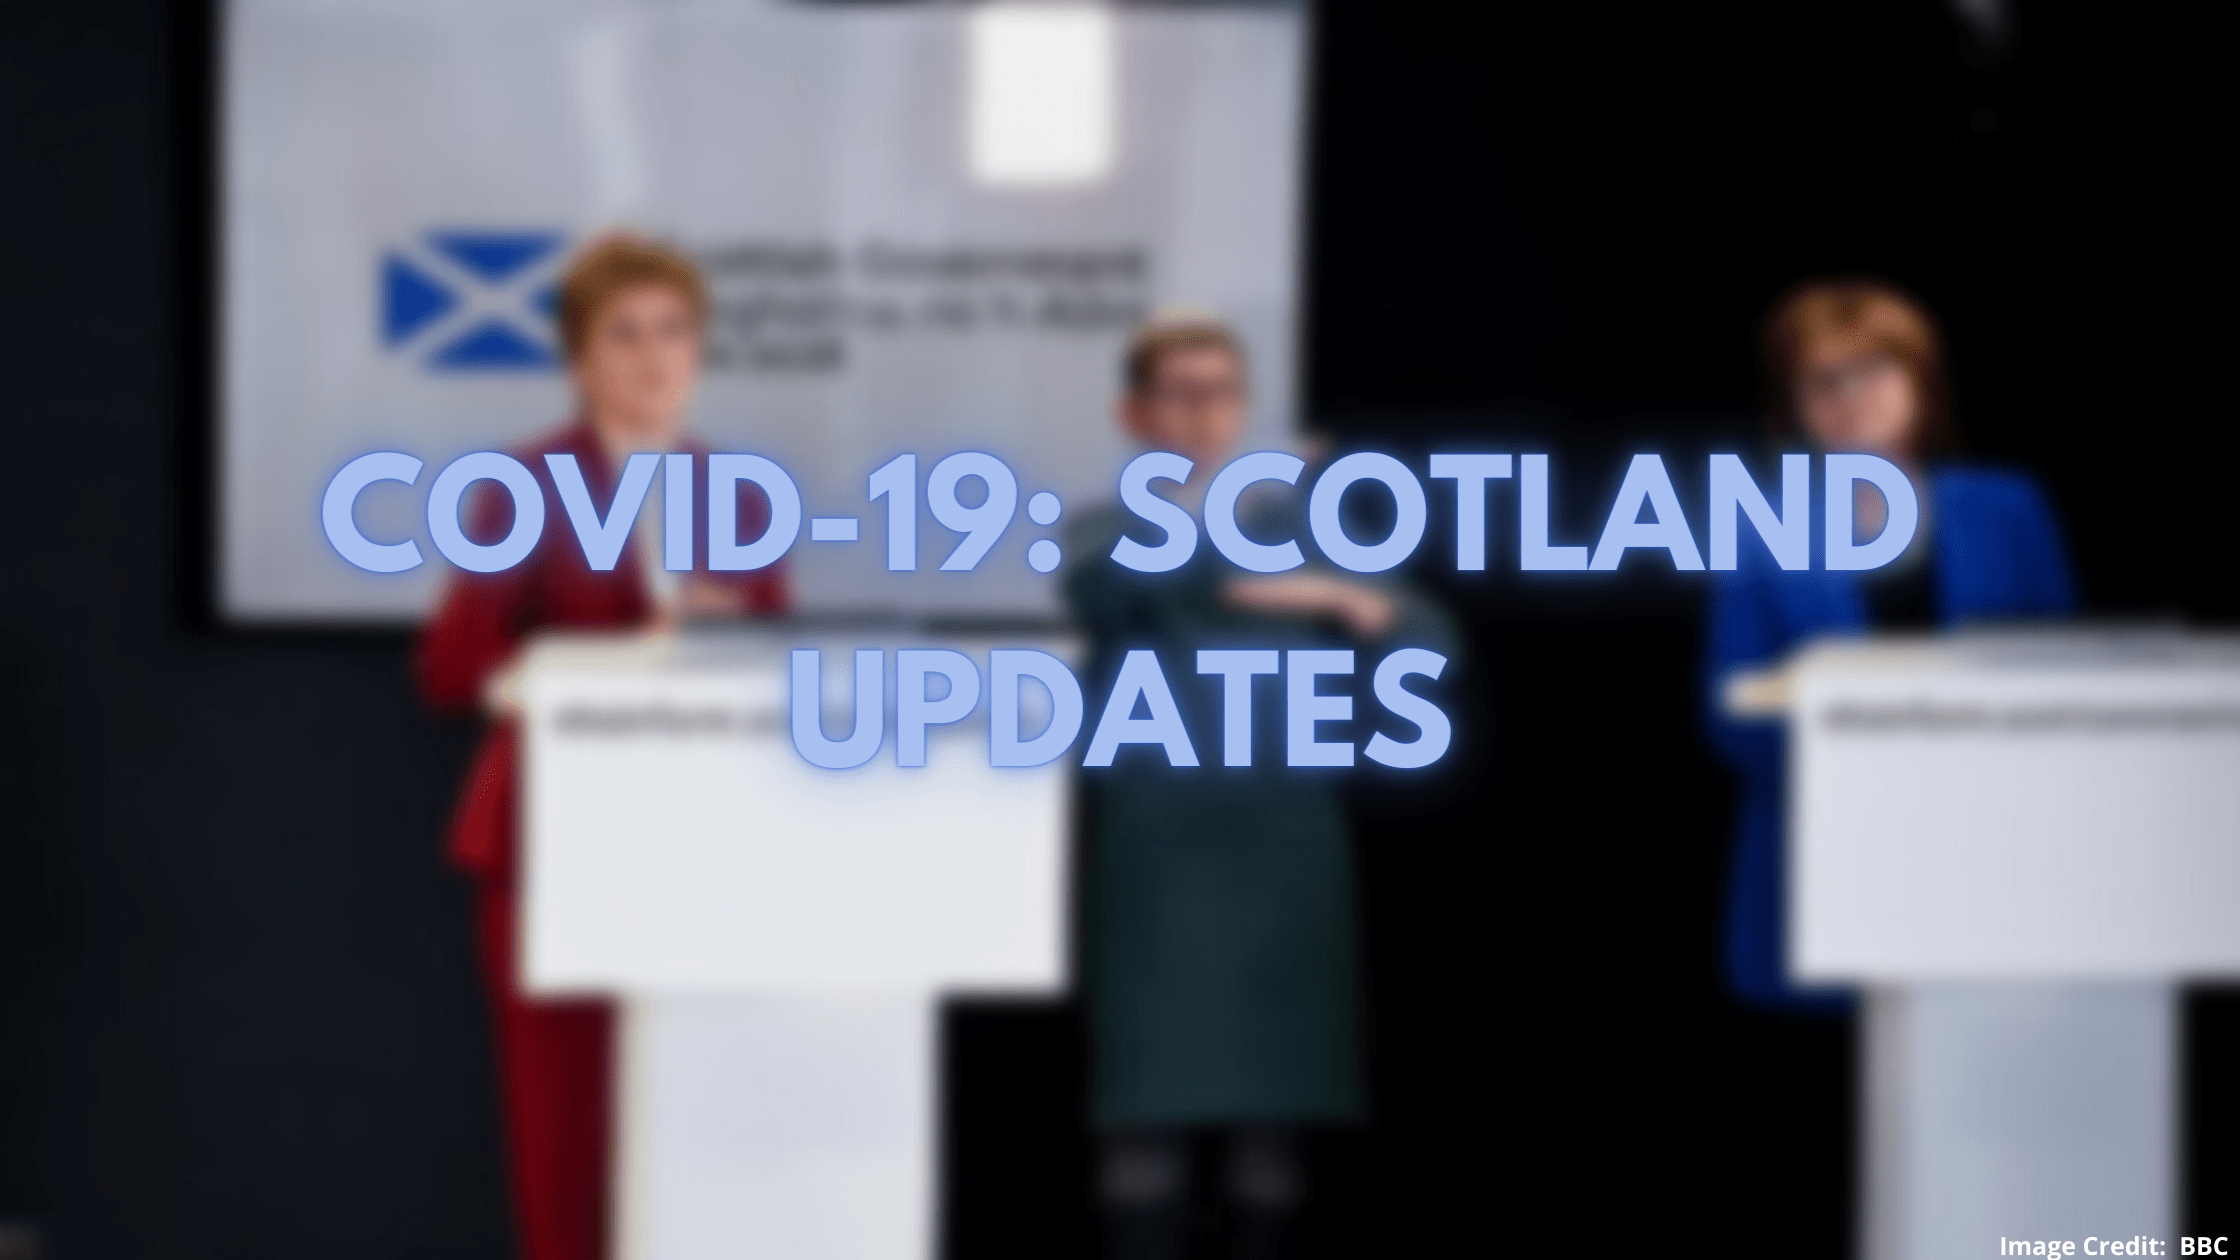 COVID-19: Scotland Updates